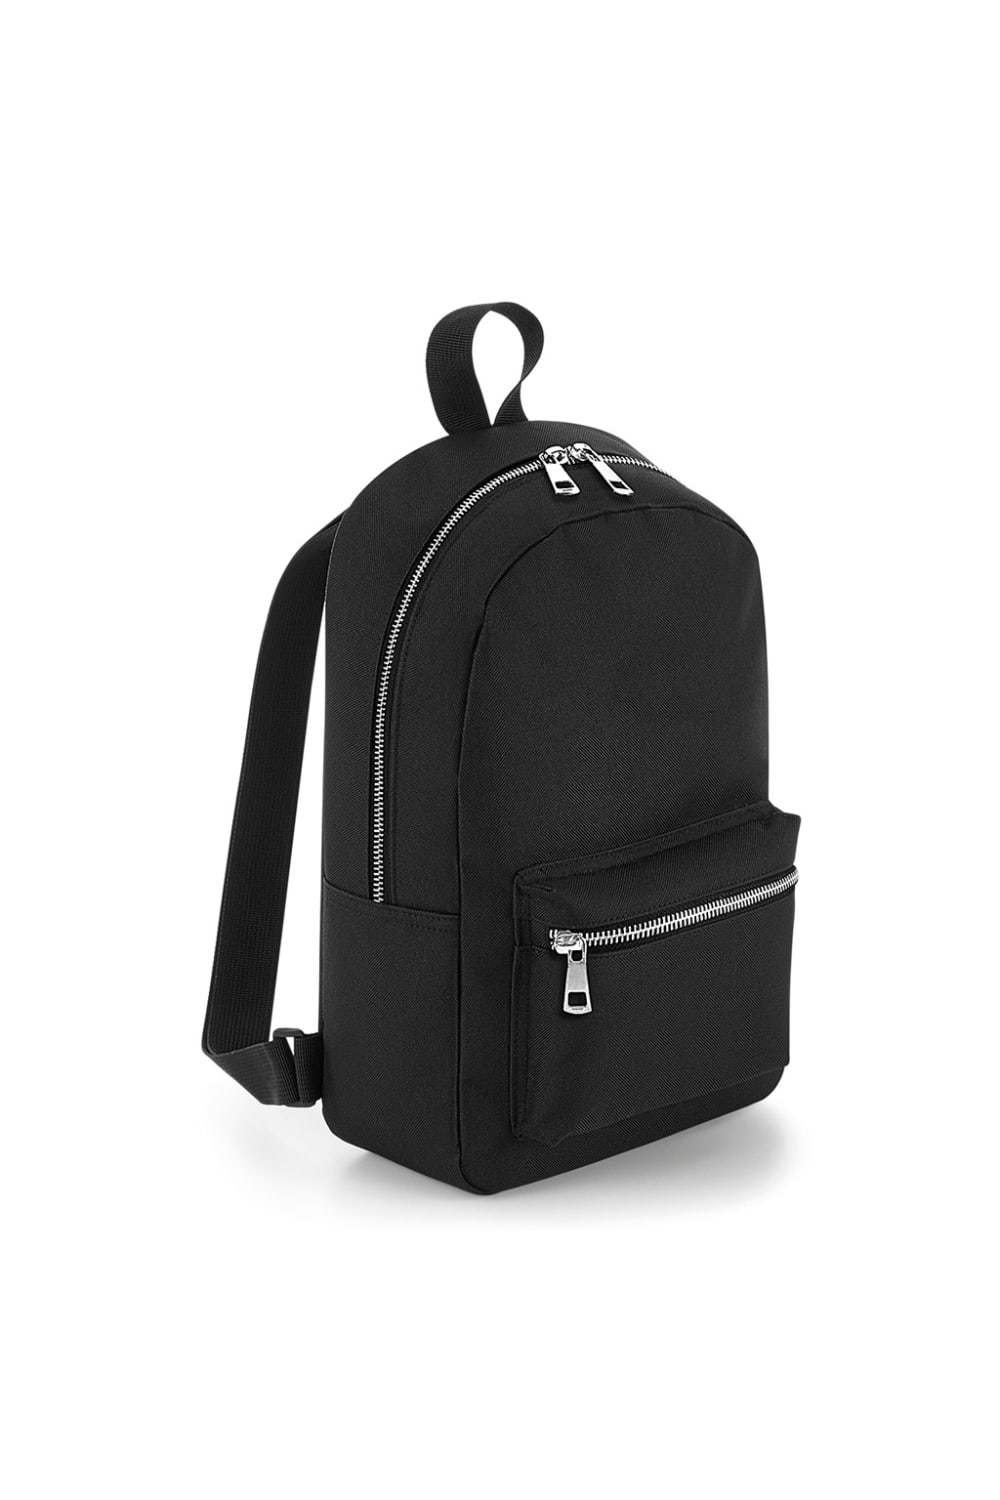 Metallic Zip Mini Backpack - Black/Silver